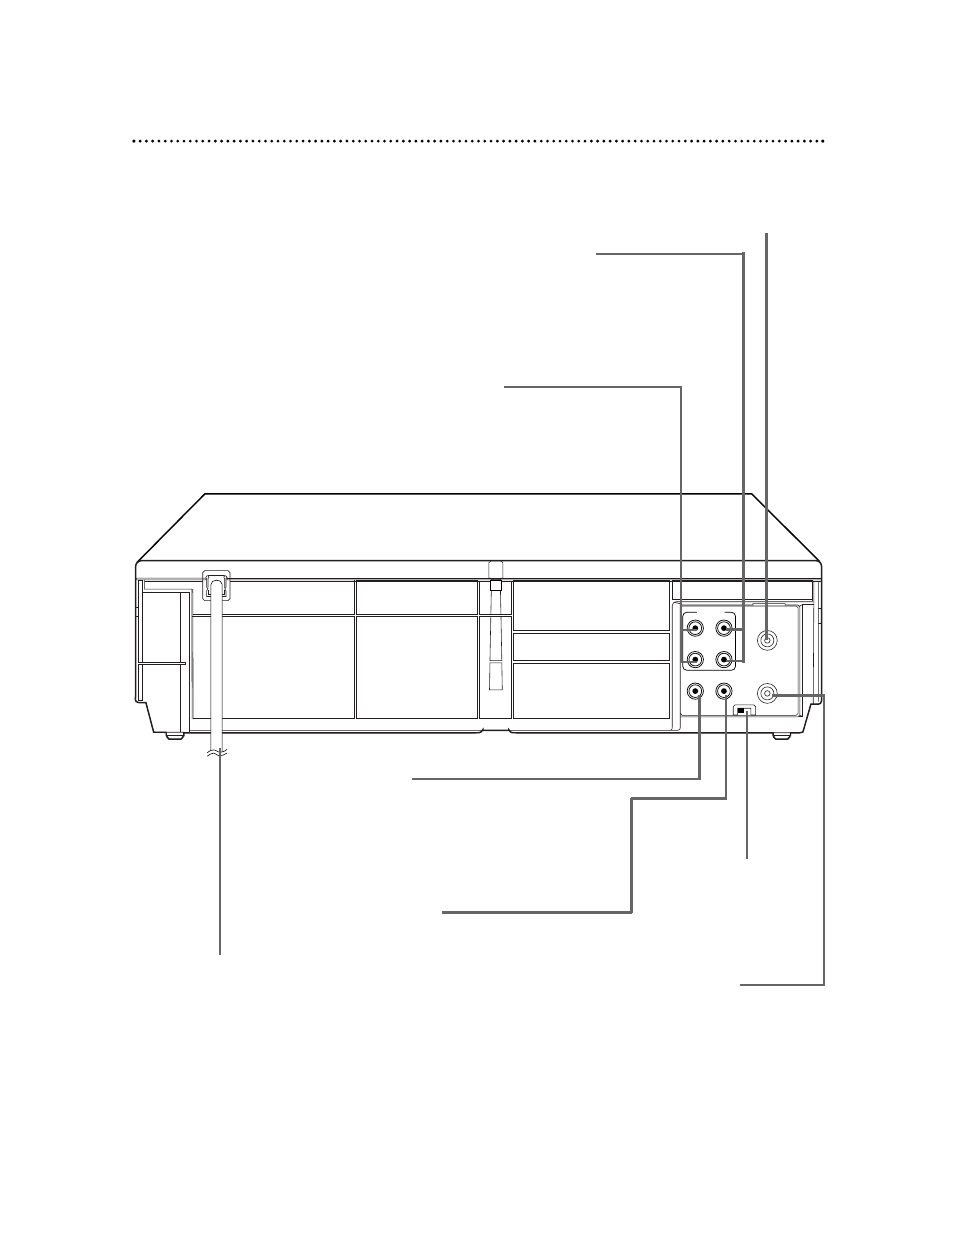 Rear panel 23 | Philips Magnavox VR401BMX User Manual | Page 8 / 9